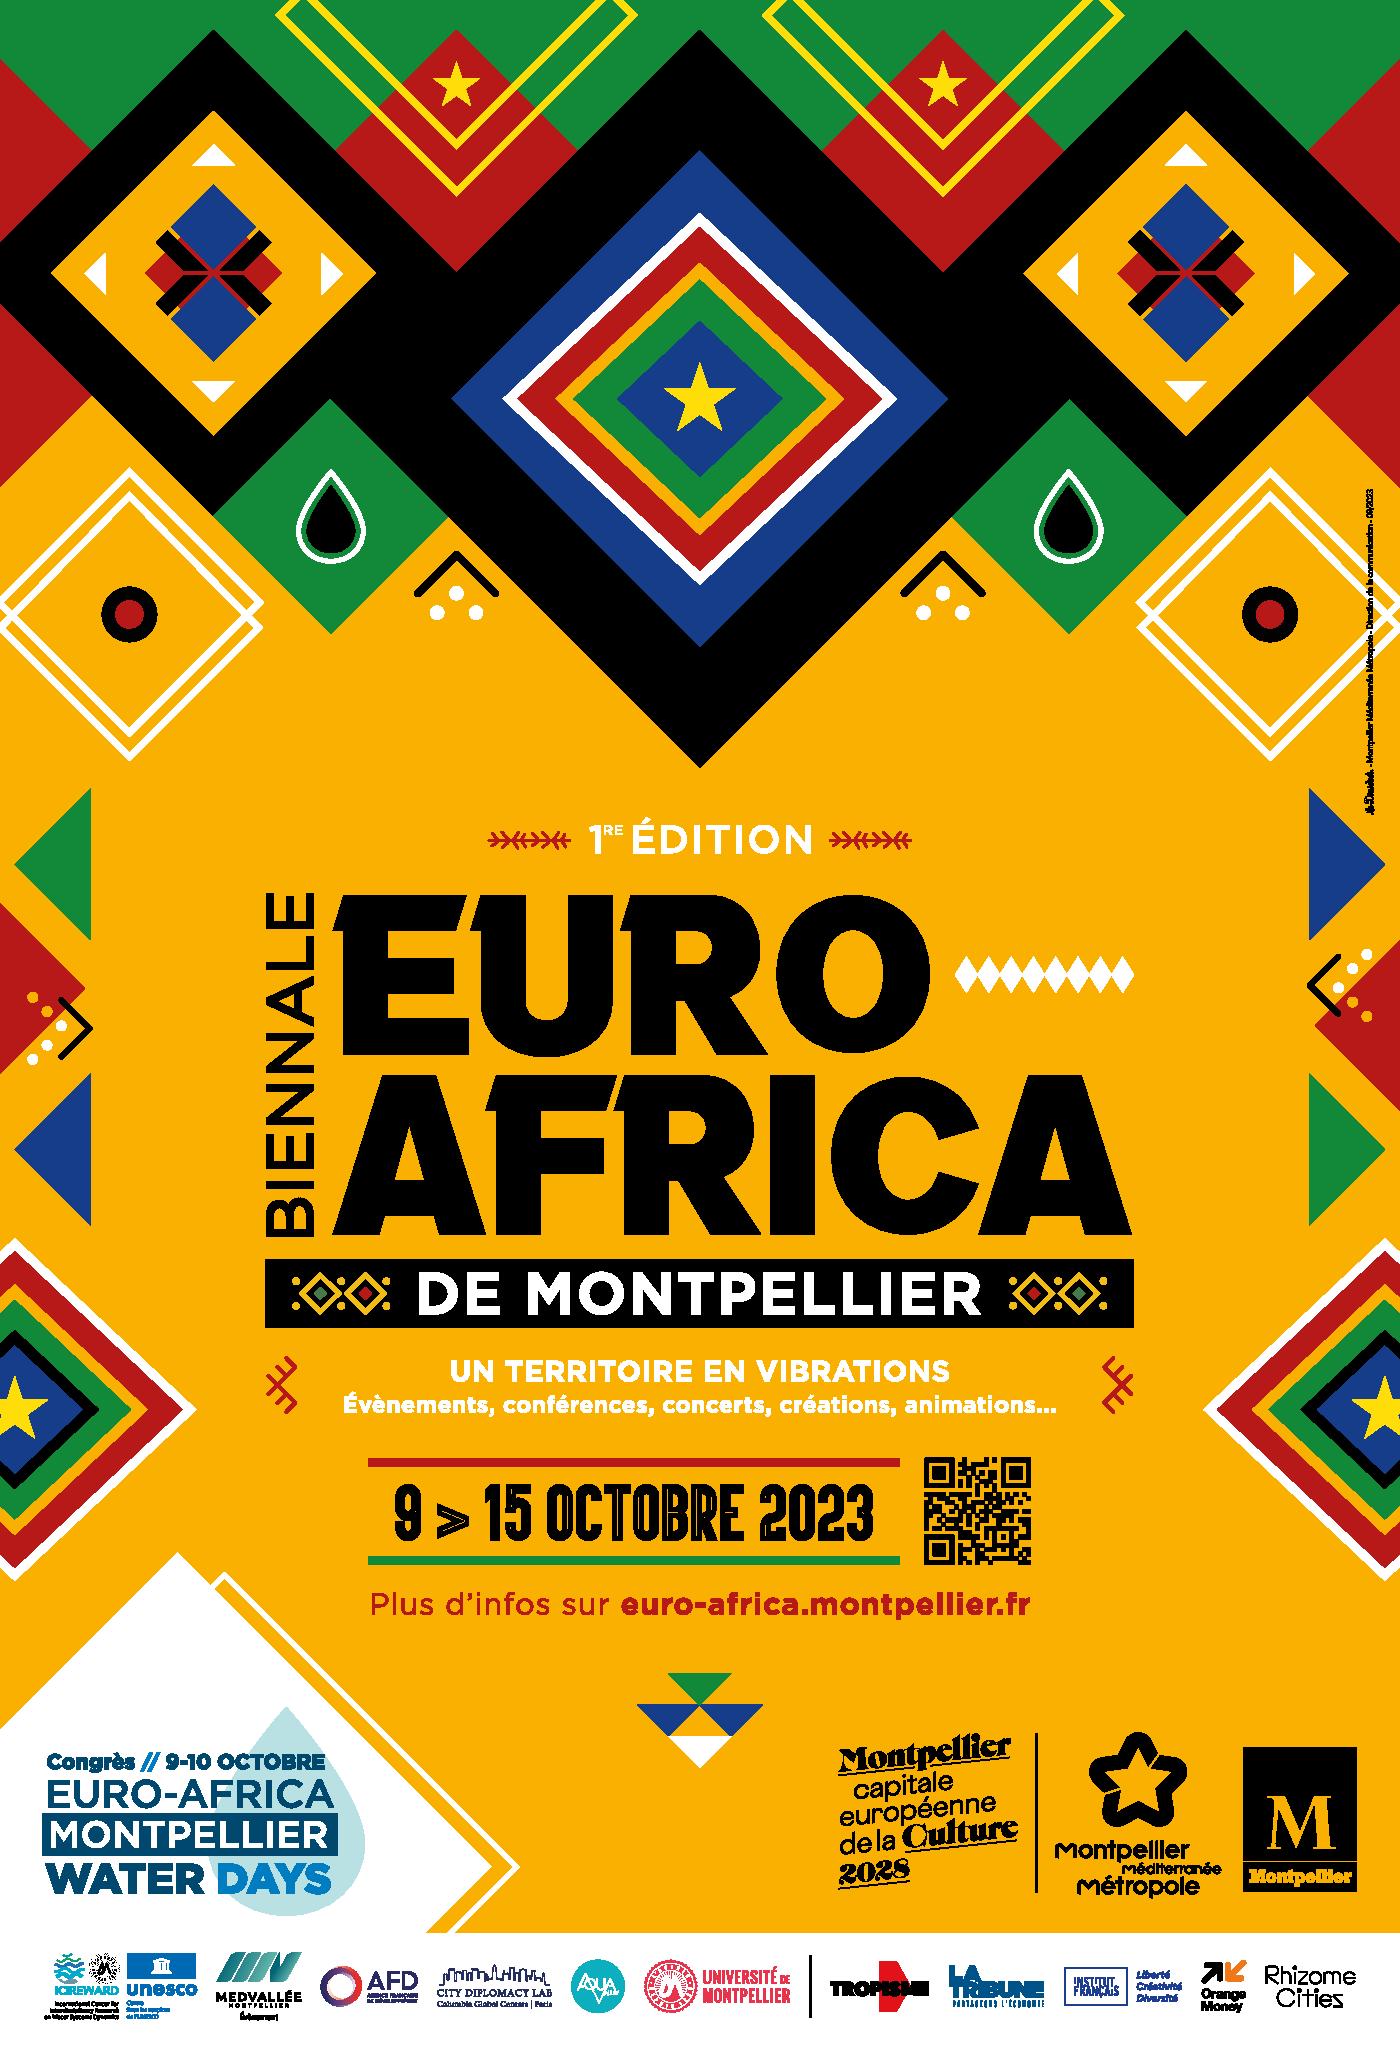 092123_MMM_Biennale_Euro_Africa_Affiche_Logos_Def_1185x1750_20pc_BD-page-001.jpg